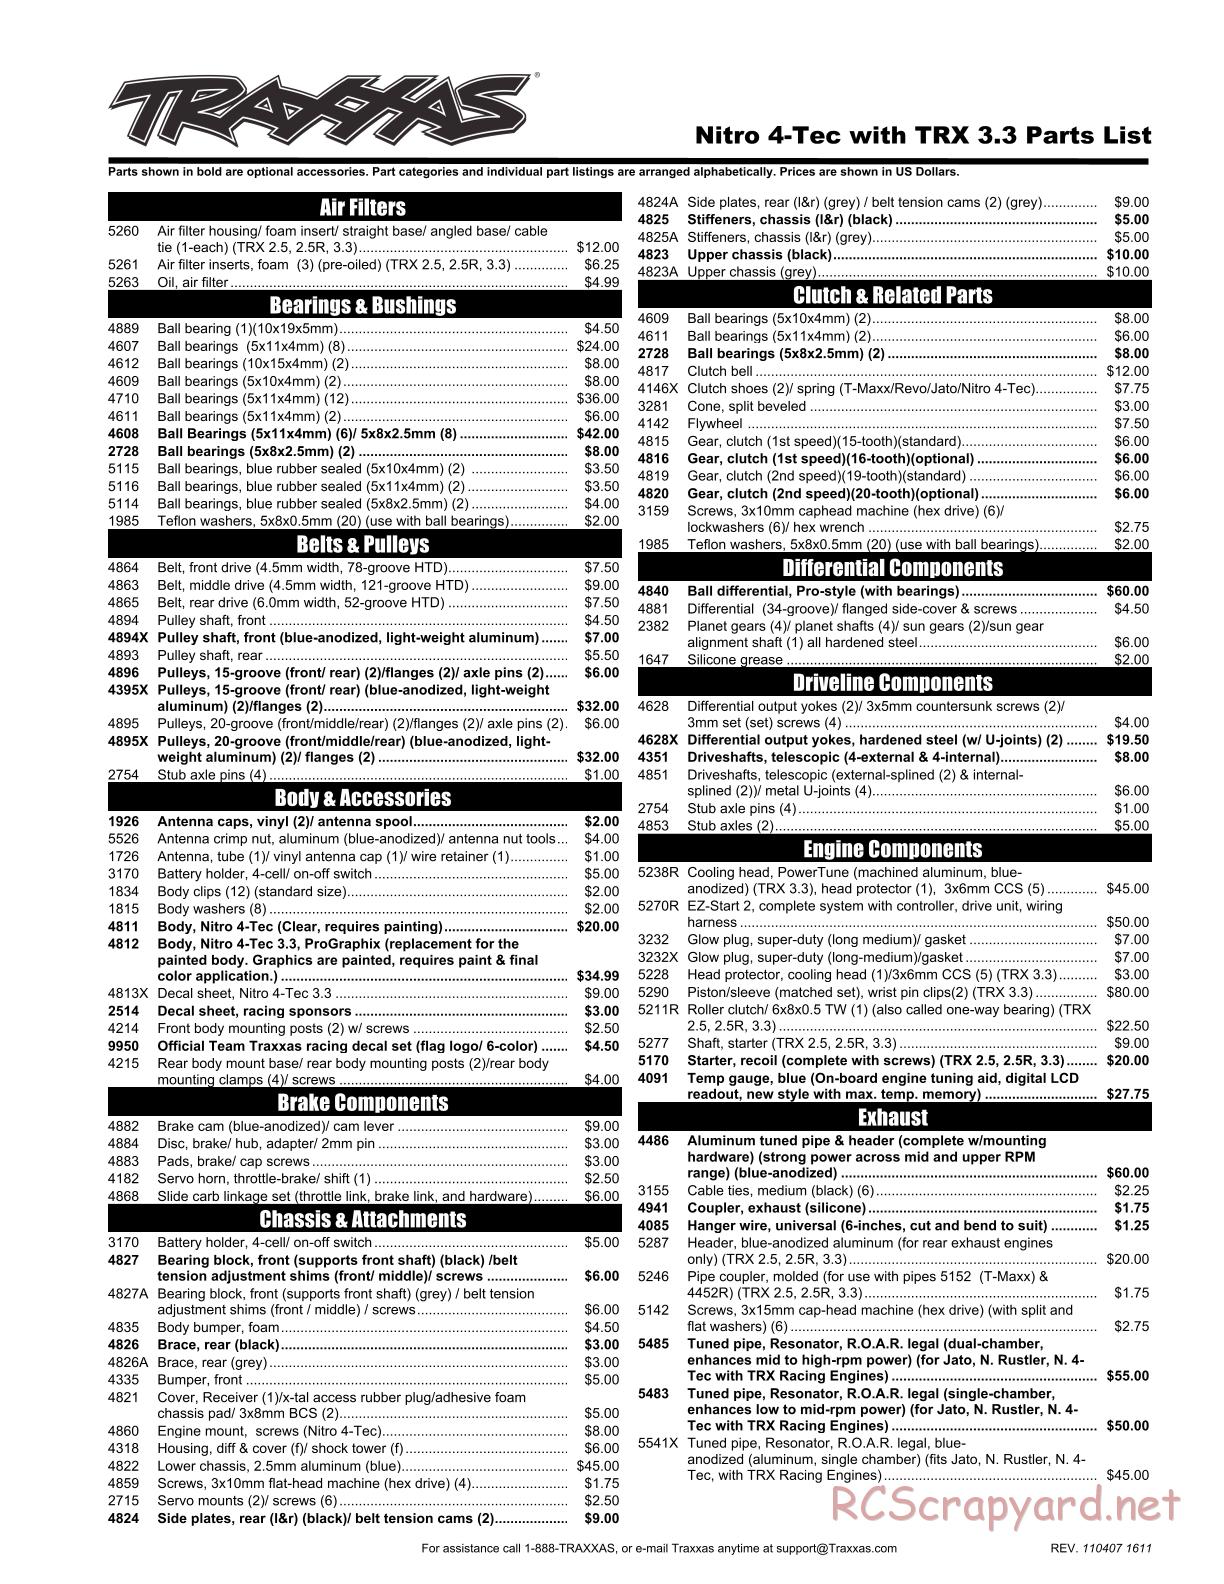 Traxxas - Nitro 4-Tec 3.3 (2006) - Parts List - Page 1